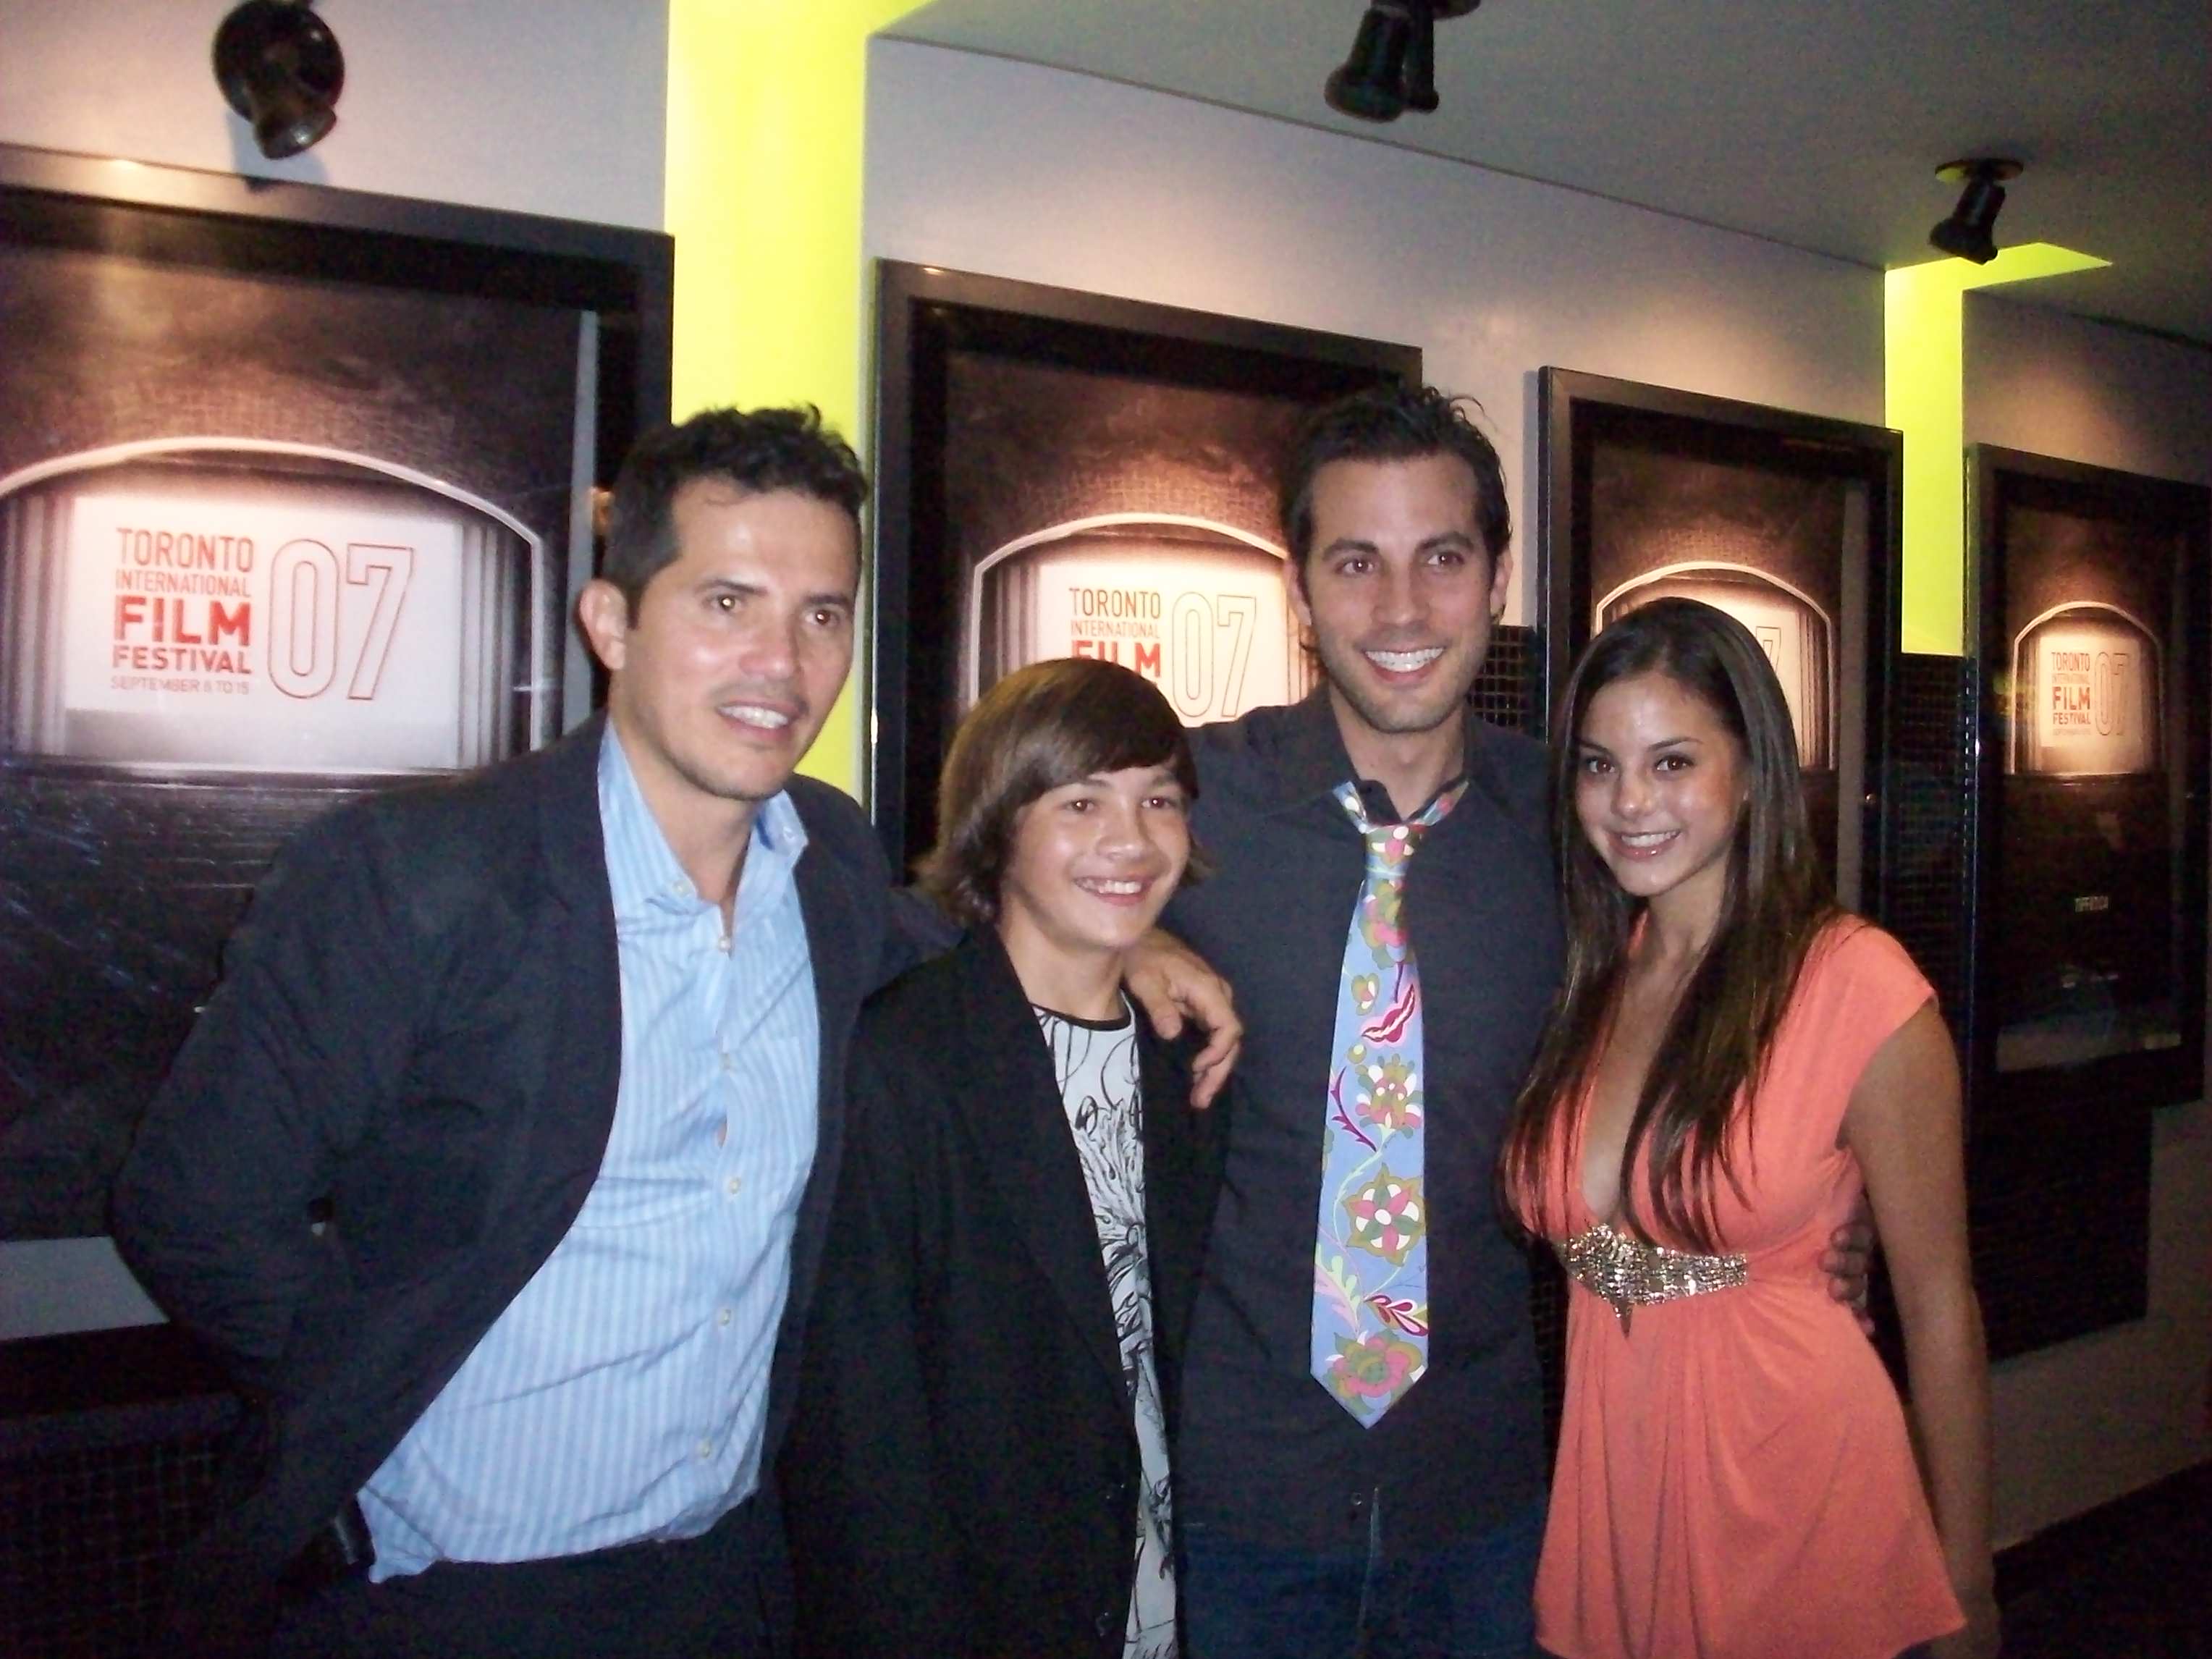 John Leguizamo, Taylor Gray, Brad Furman & Jessica Steinbaum-Lopez at the Toronto International Film Festival (Sept. 12, 2007)